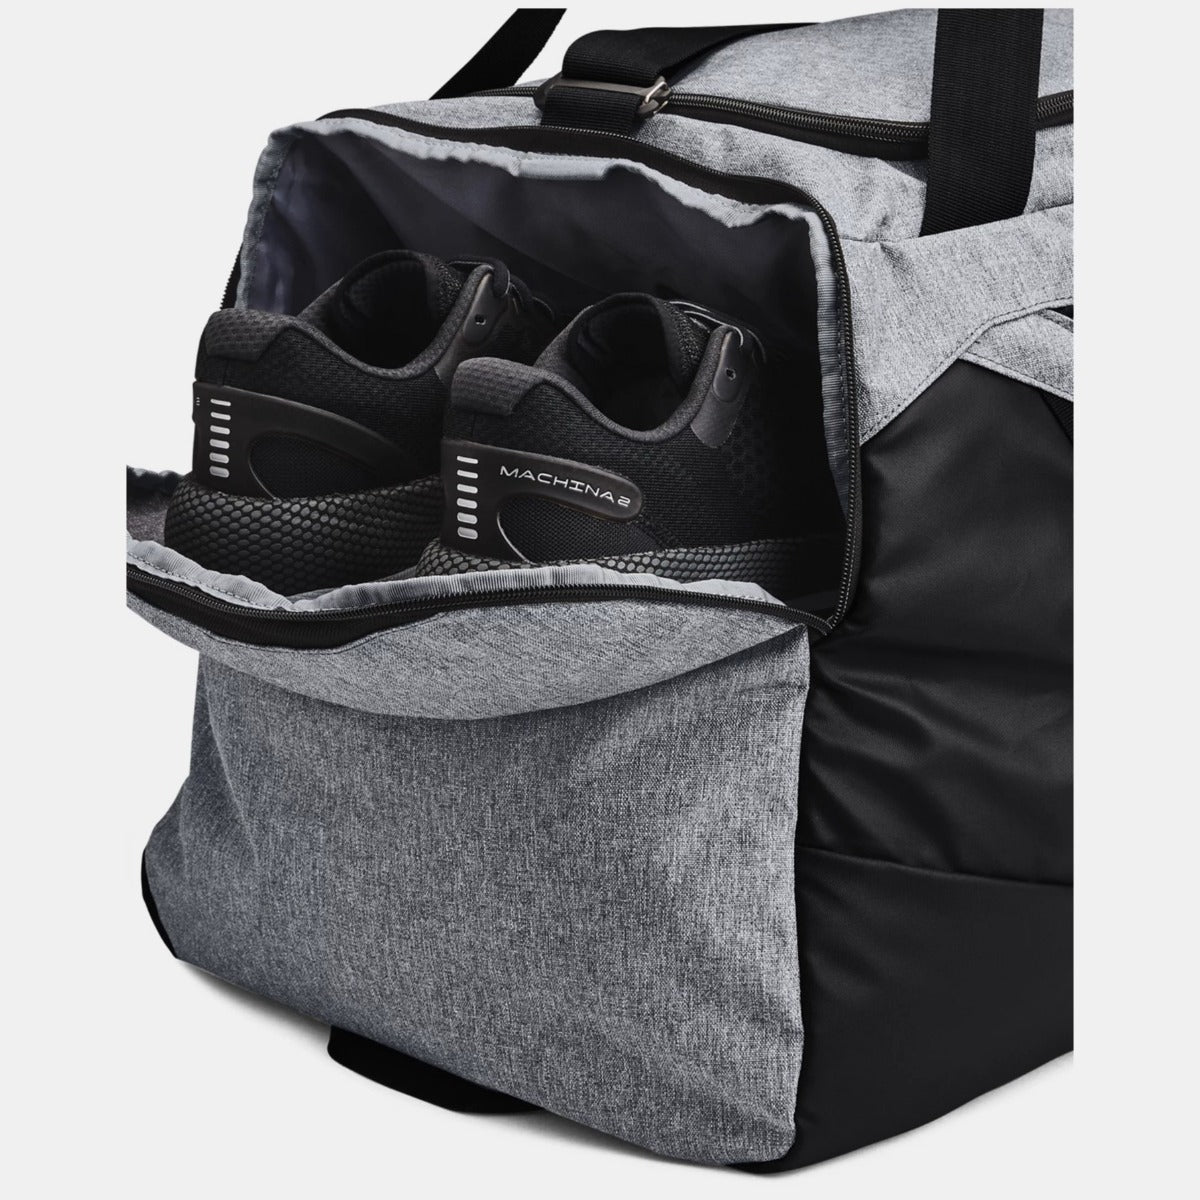 Under Armour Undeniable 5.0 Large Duffle Bag (Grey Black 012)